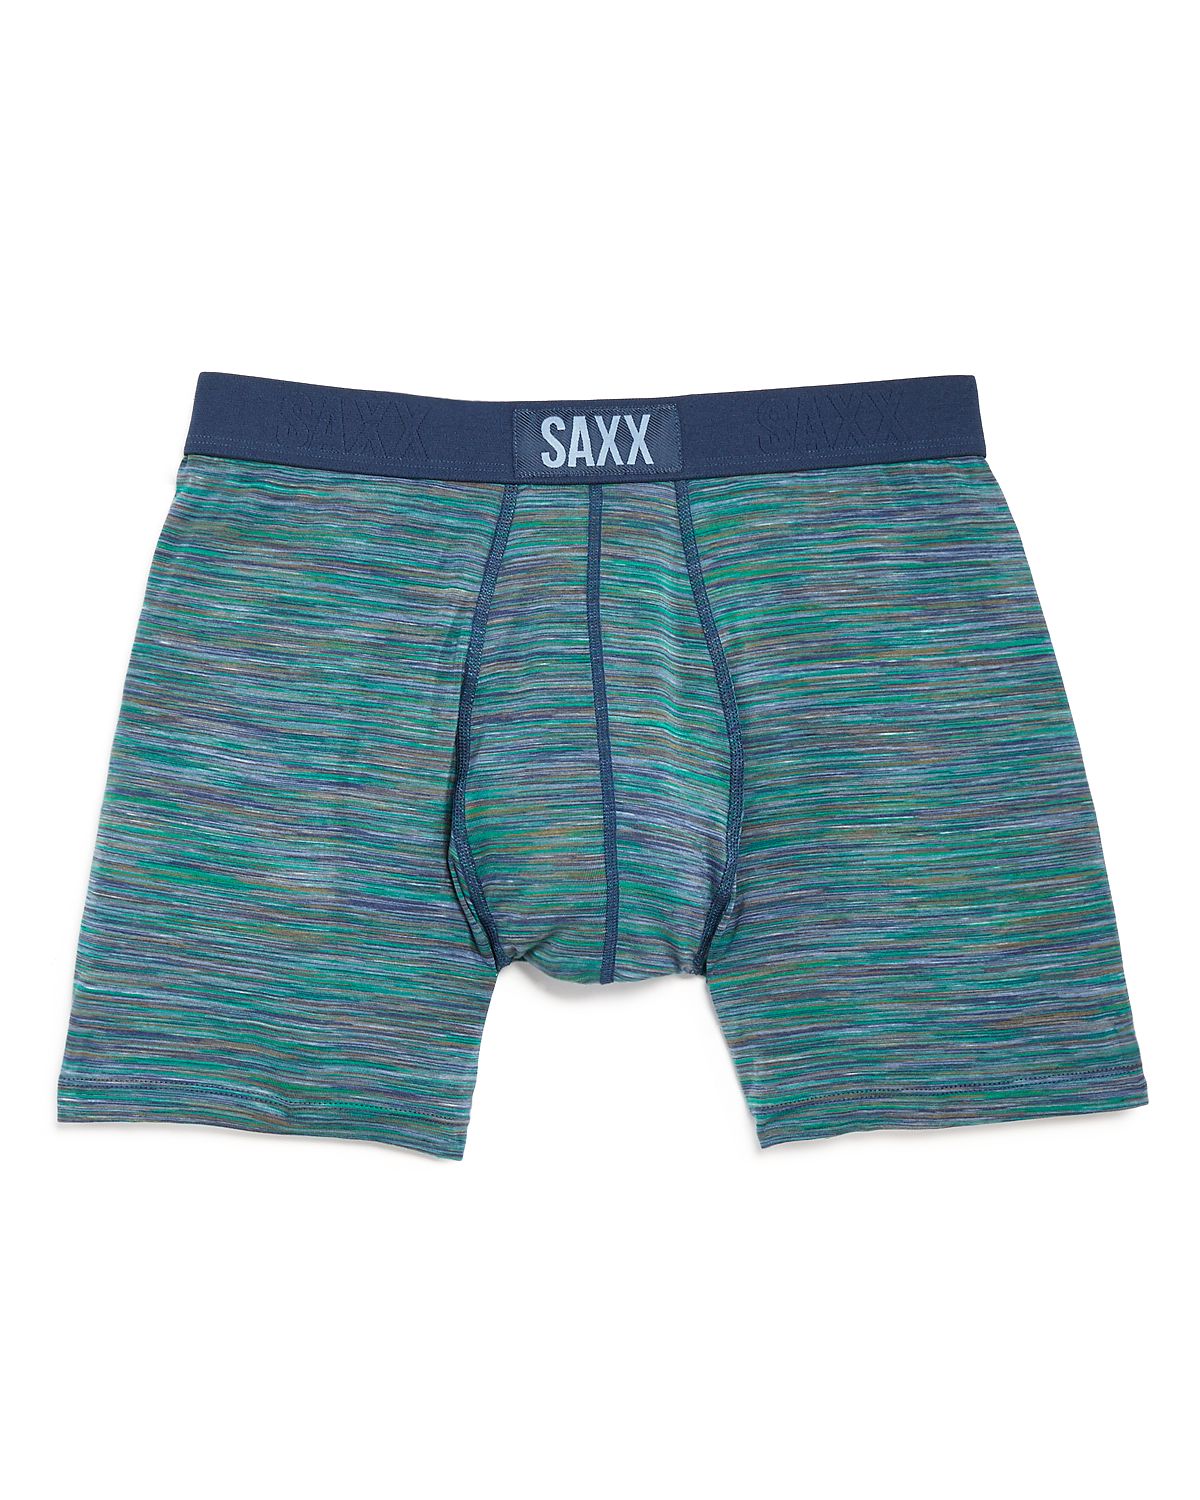 Saxx Vibe Boxer Briefs Green